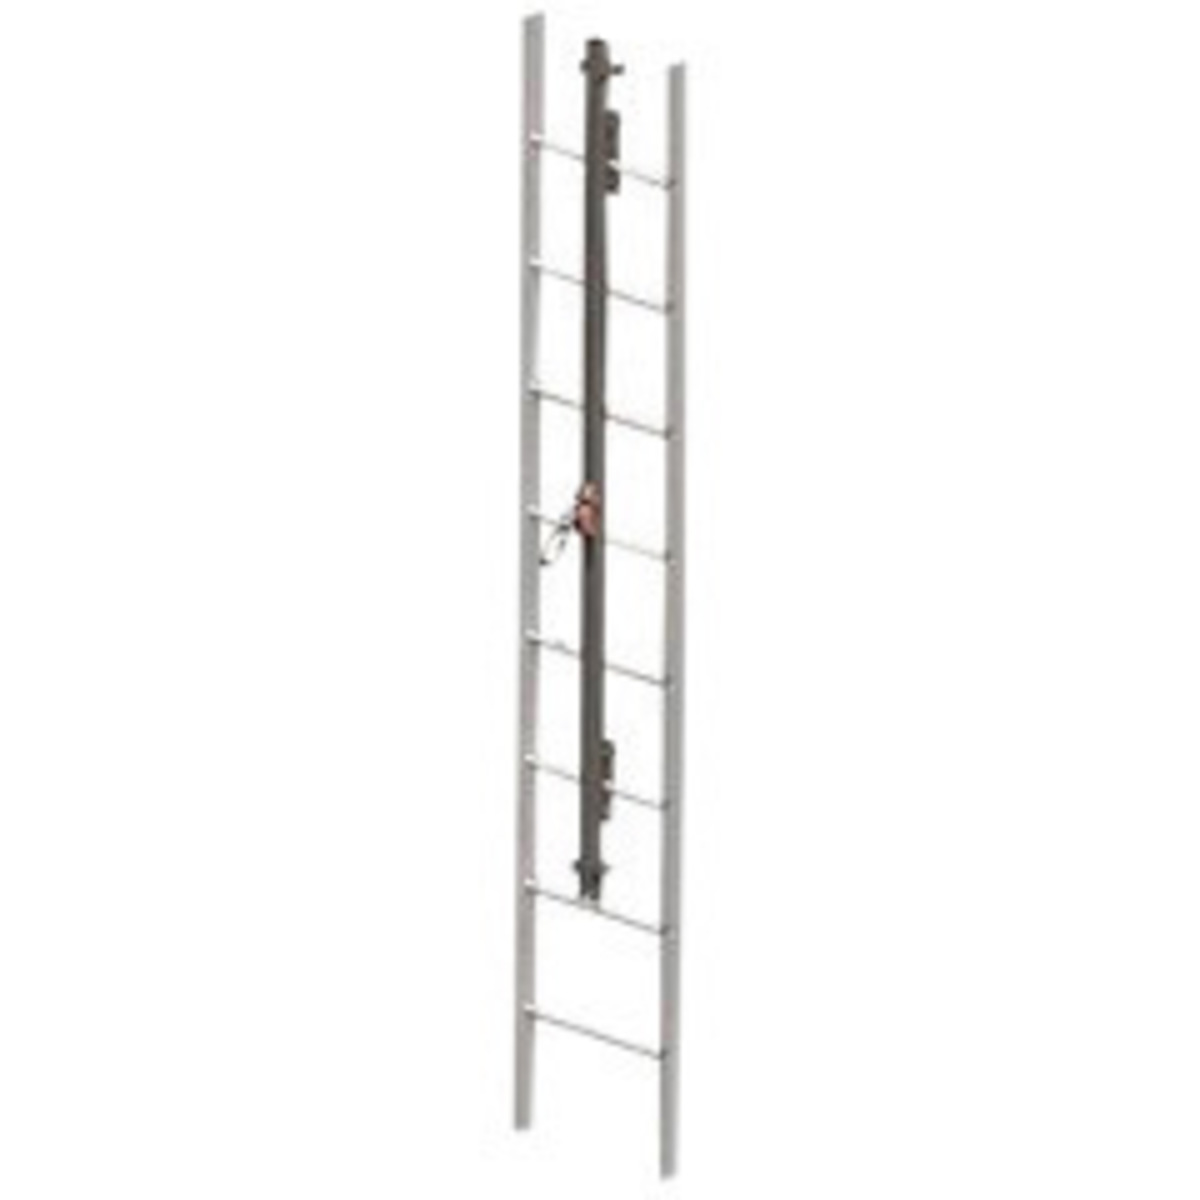 Honeywell Miller® GlideLoc® Fixed 50' Vertical Height Access Ladder System Kit